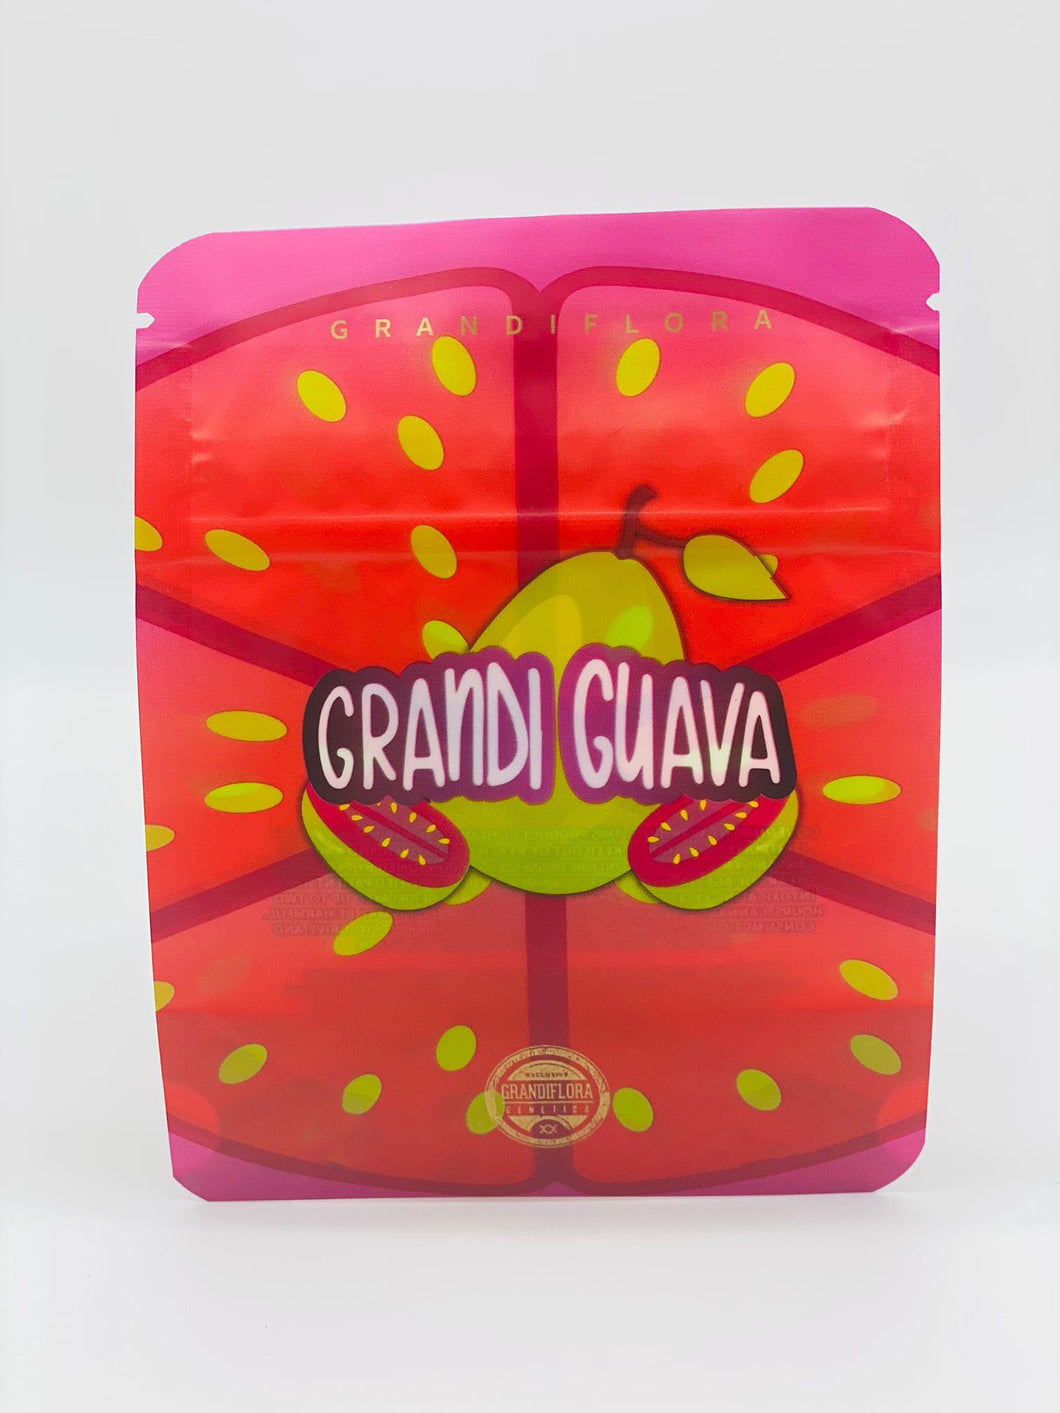 50 Grandi Guava 3.5 gram empty Mylar bags